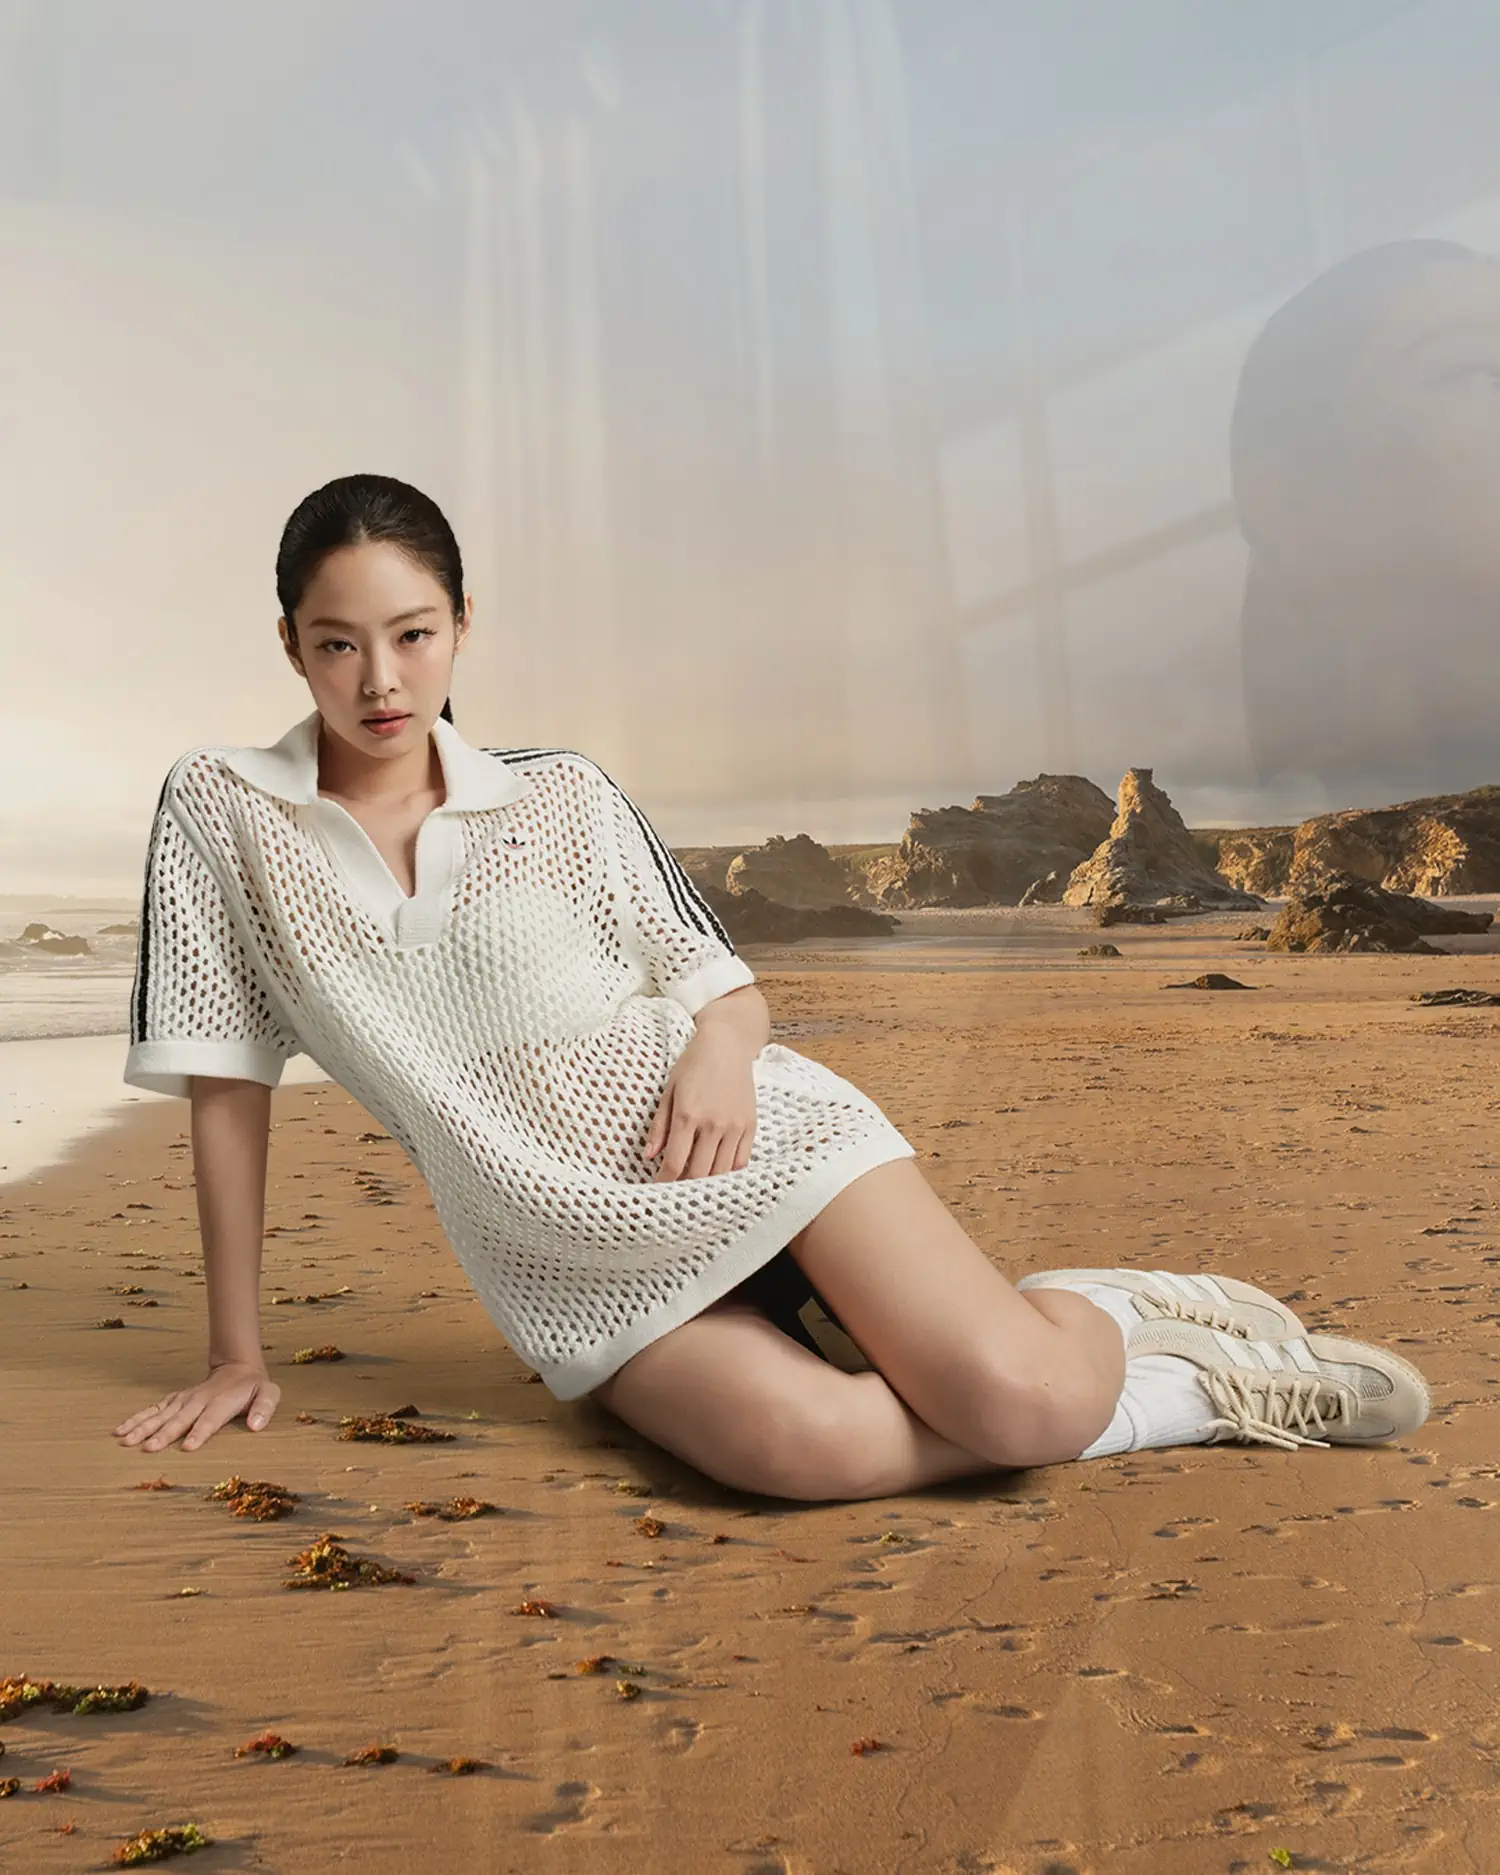 Blackpink's Jennie shows off the new adidas Originals x CLOT Gazelle by Edison Chen